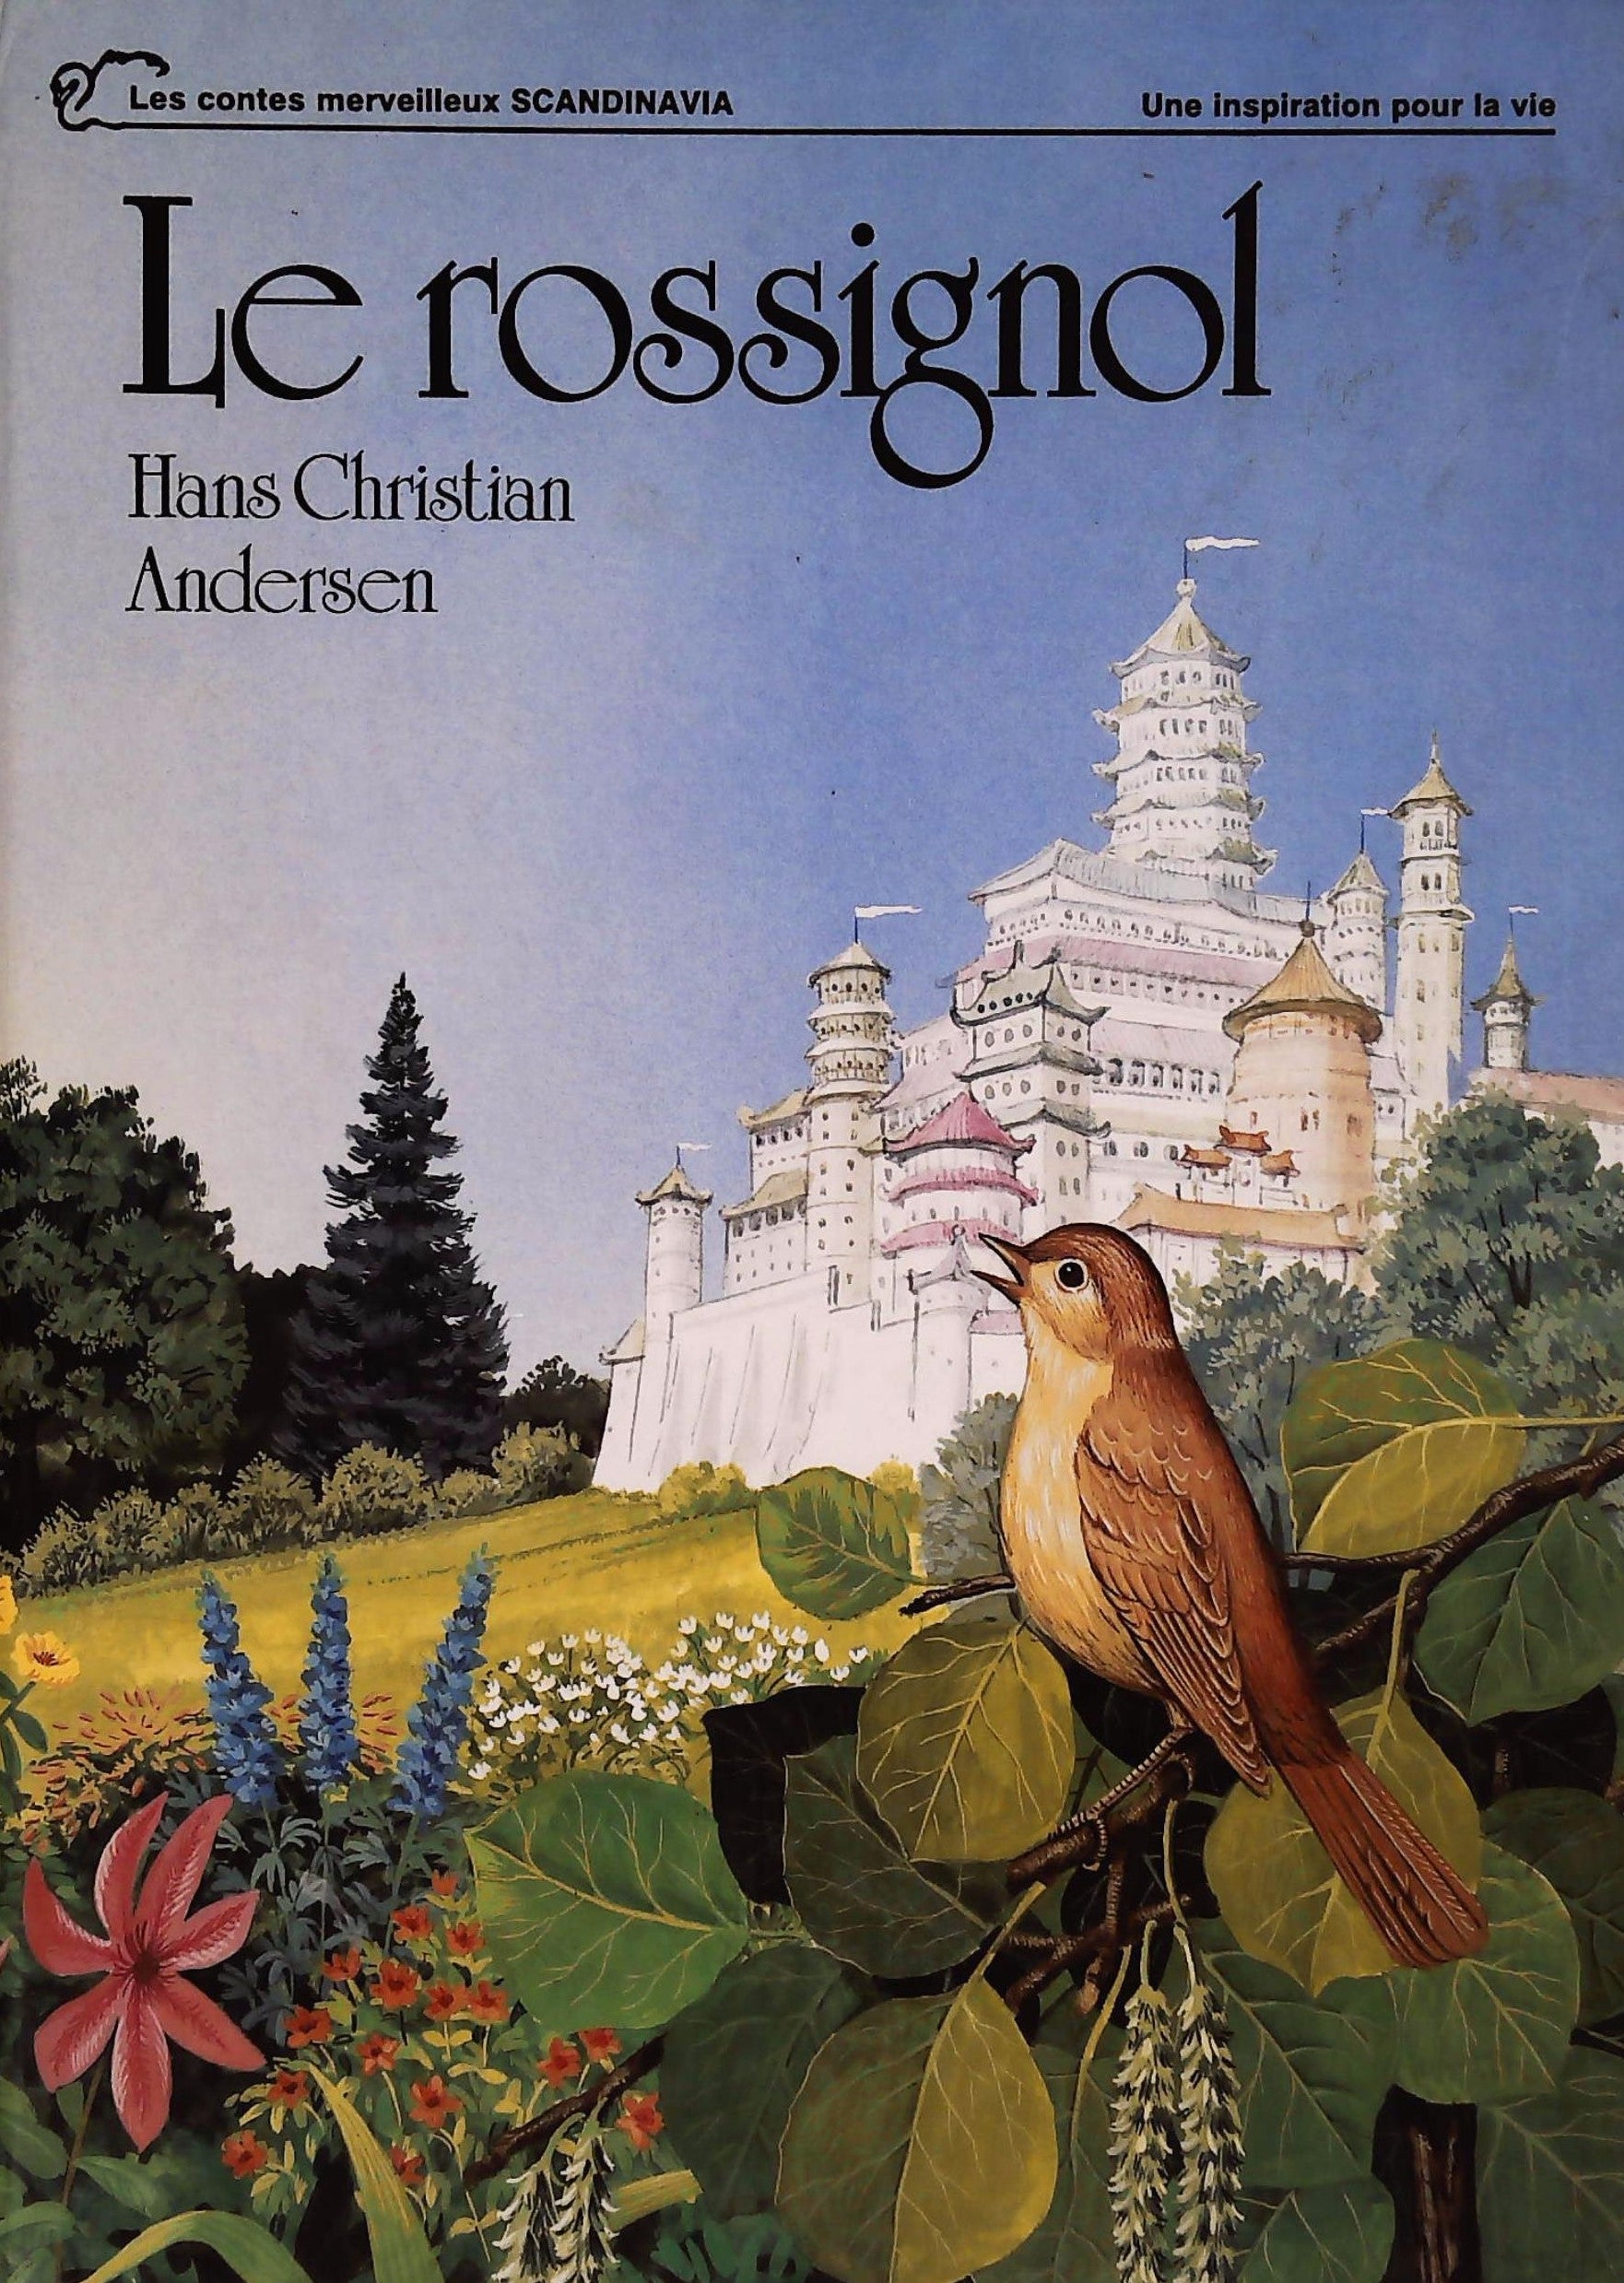 Livre ISBN 2890882187 Les contes merveilleux SCANDINAVIA : Le rossignol (Hans Christian Andersen)